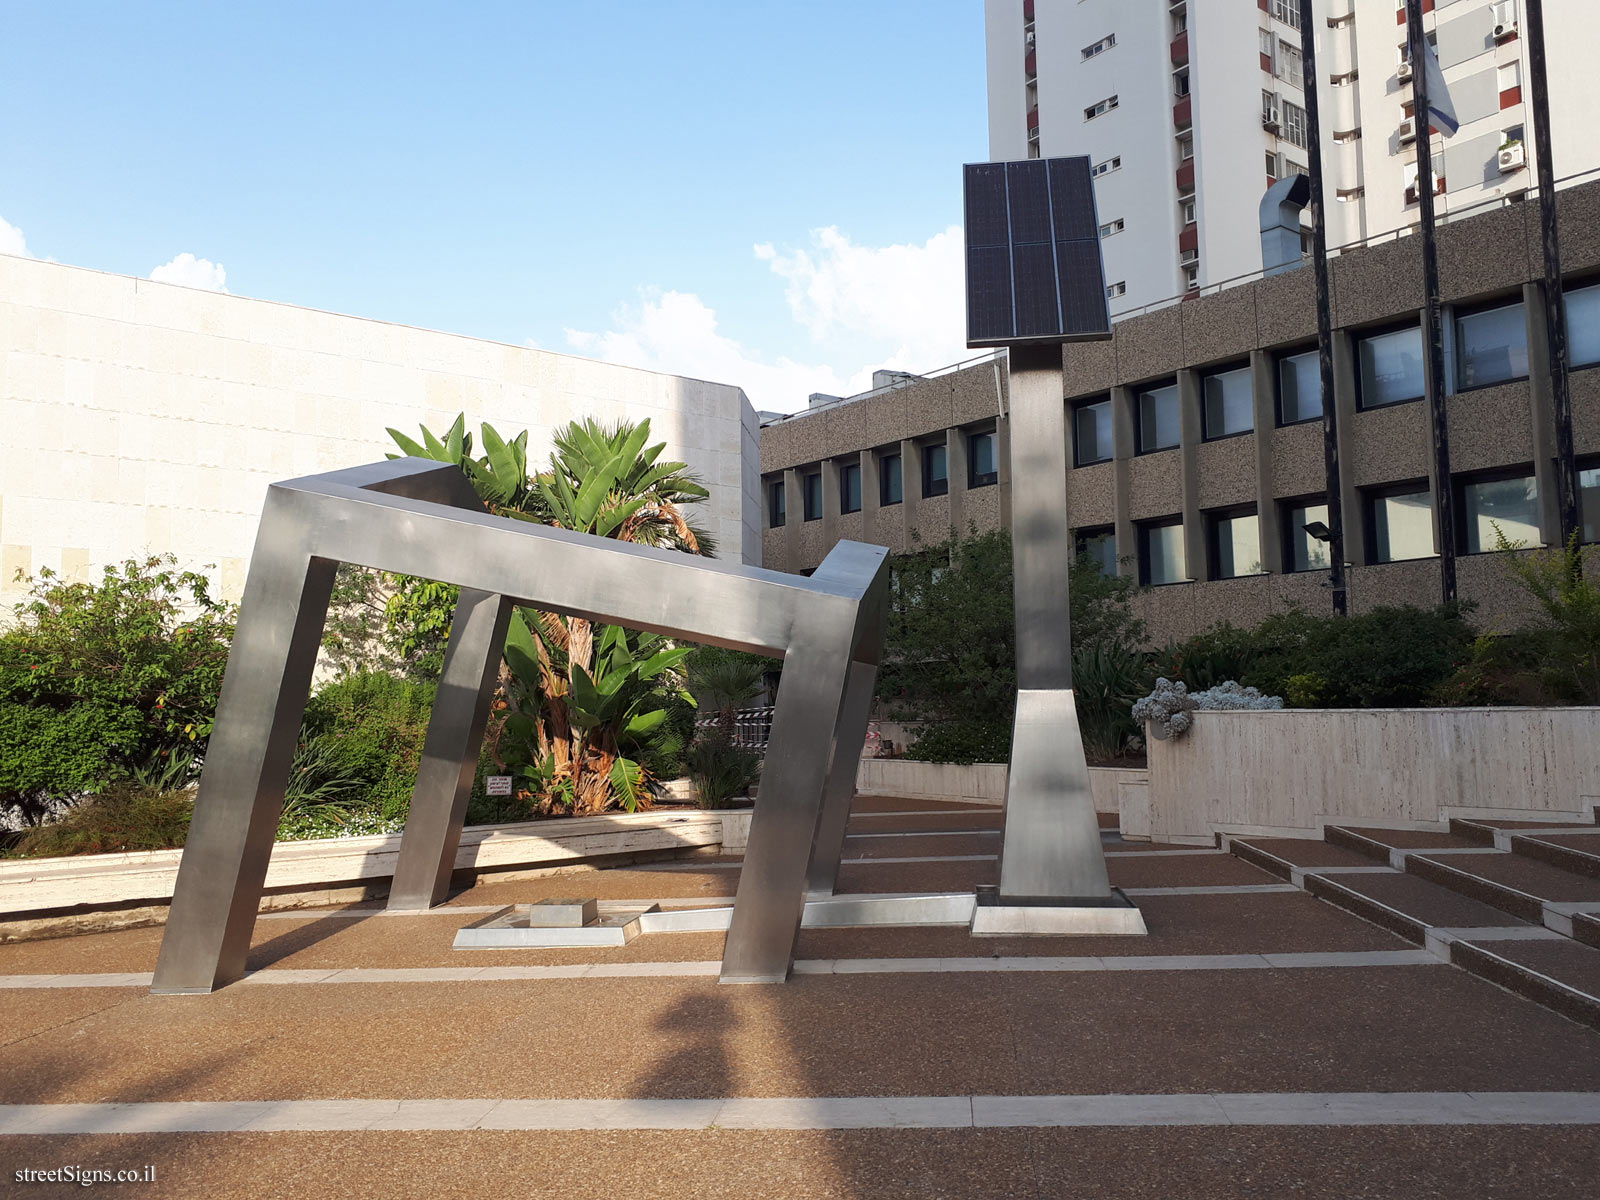 "Sites of Ra" - Outdoor sculpture by Dov Or-Ner - Daniel Frisch St 3, Tel Aviv-Yafo, Israel